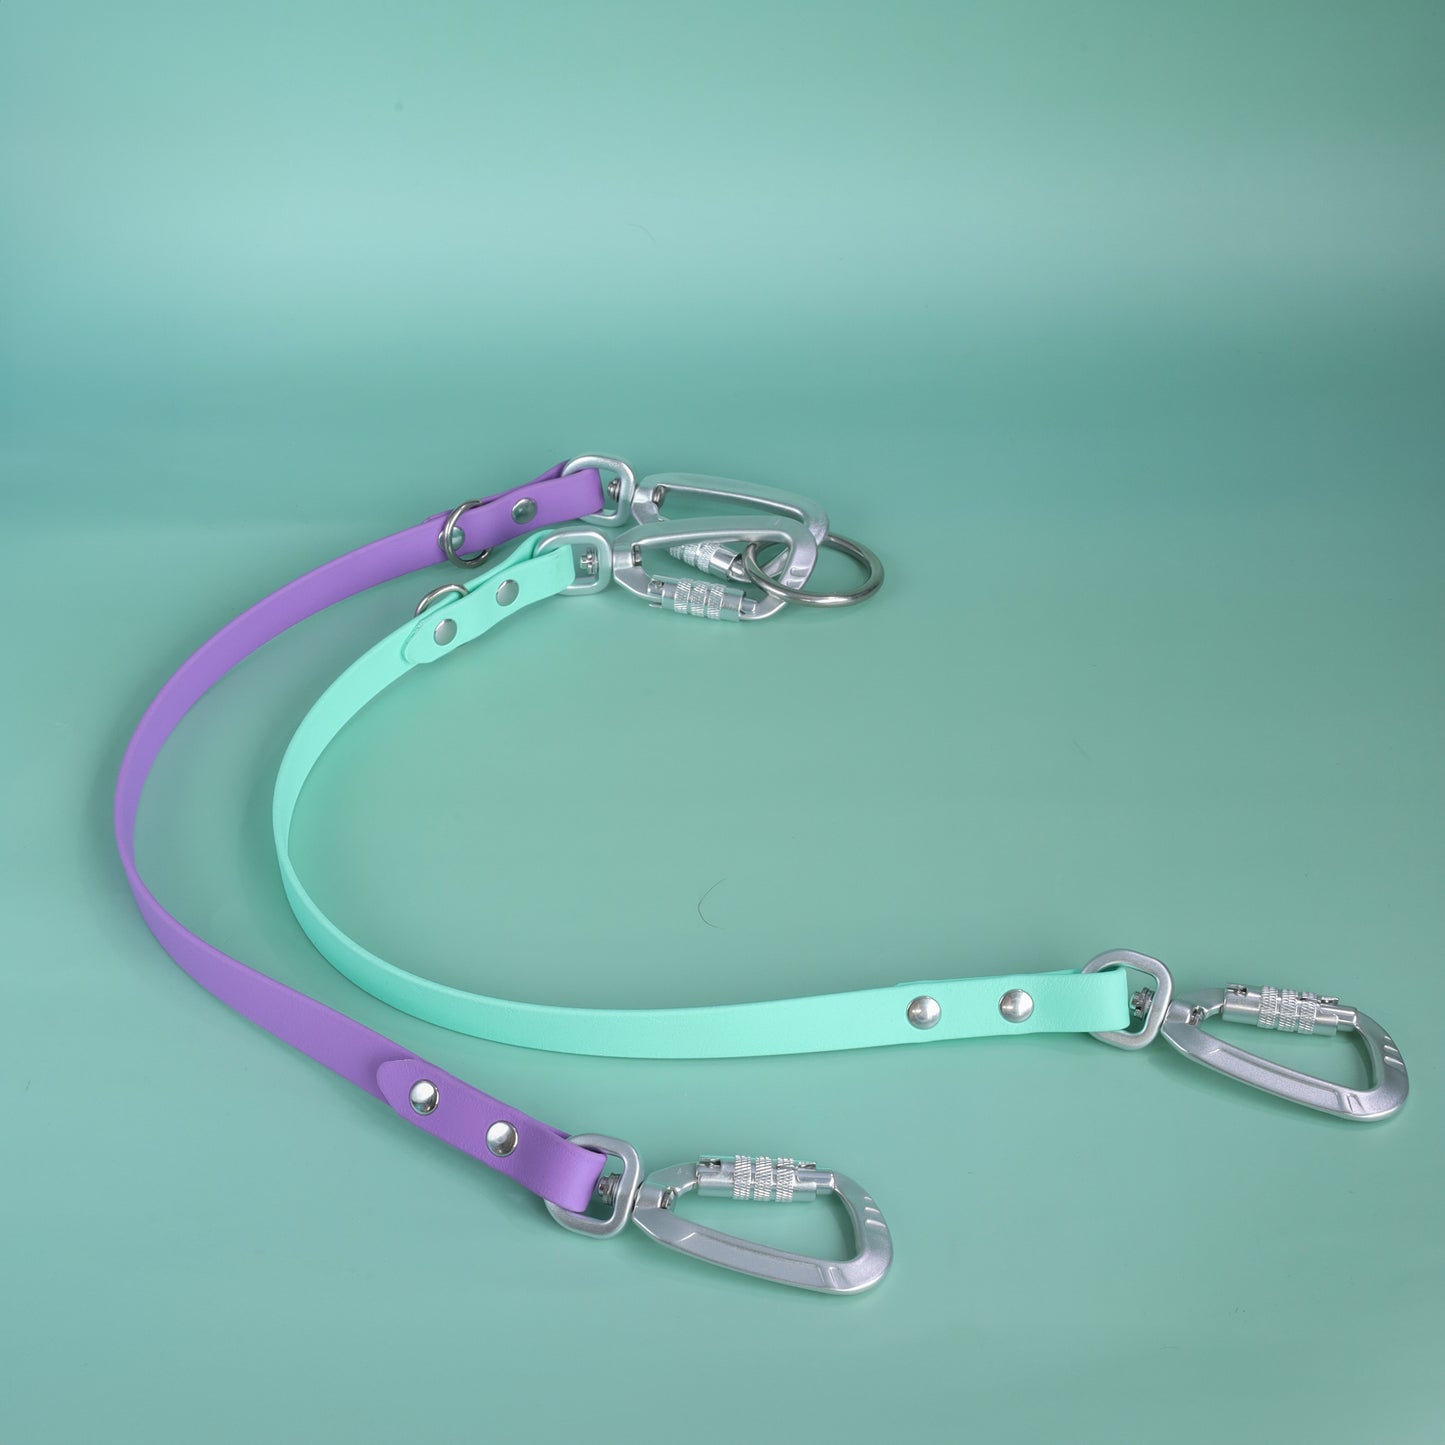 Ruffly dog leash splitter / multi dog walking system